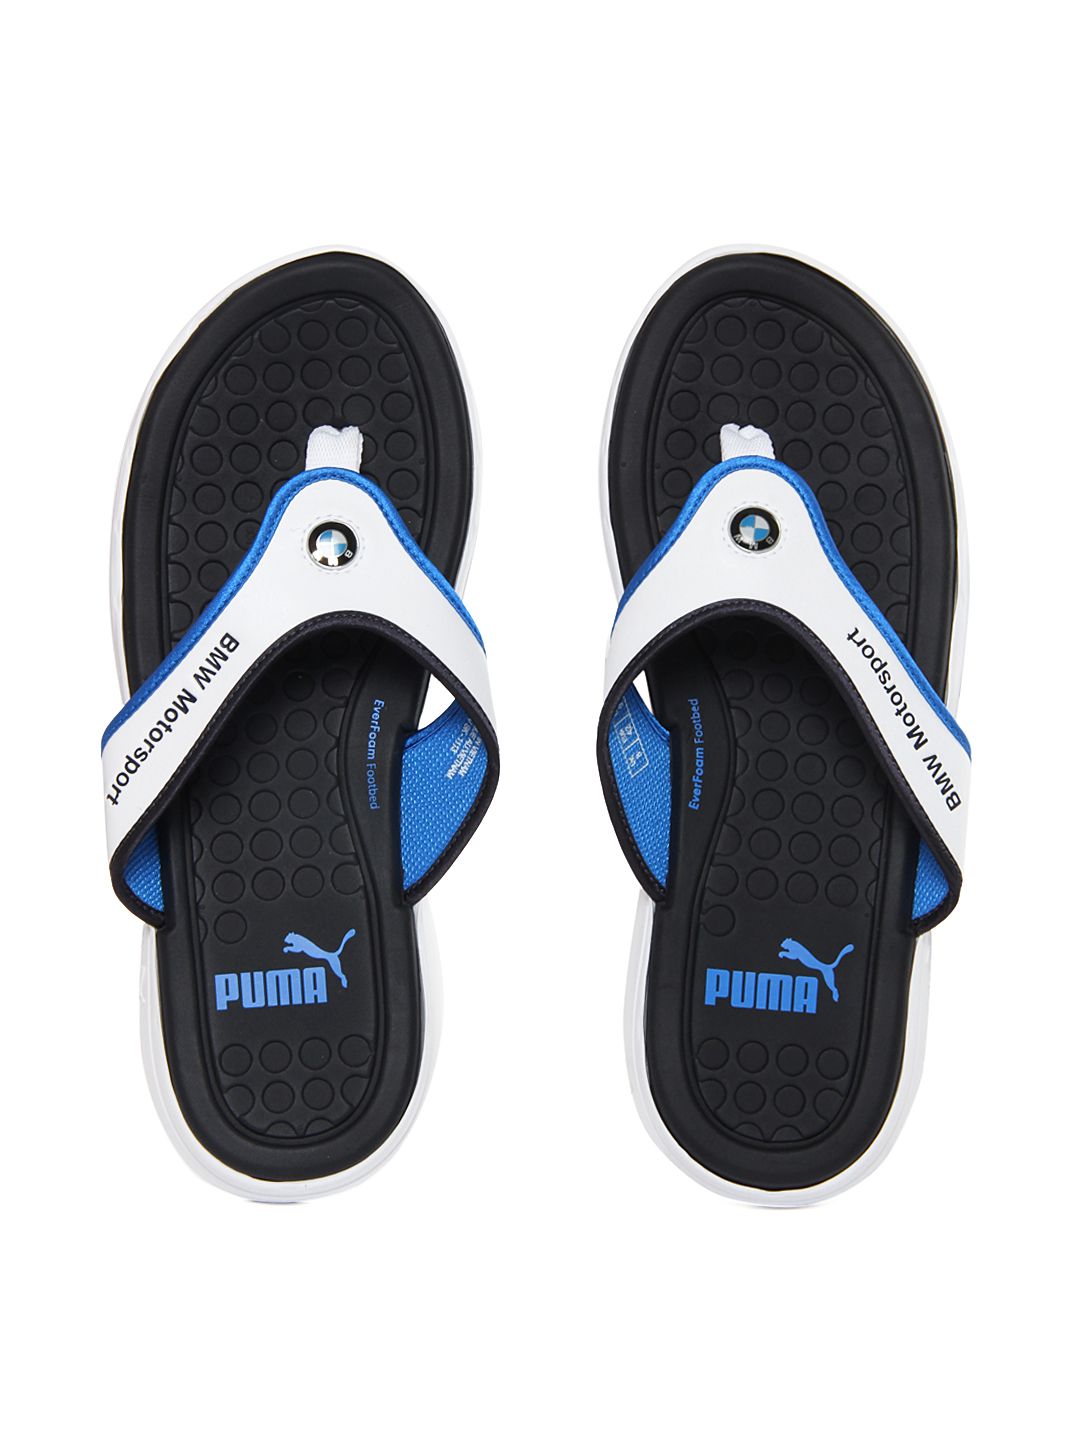 puma flip flops online sale